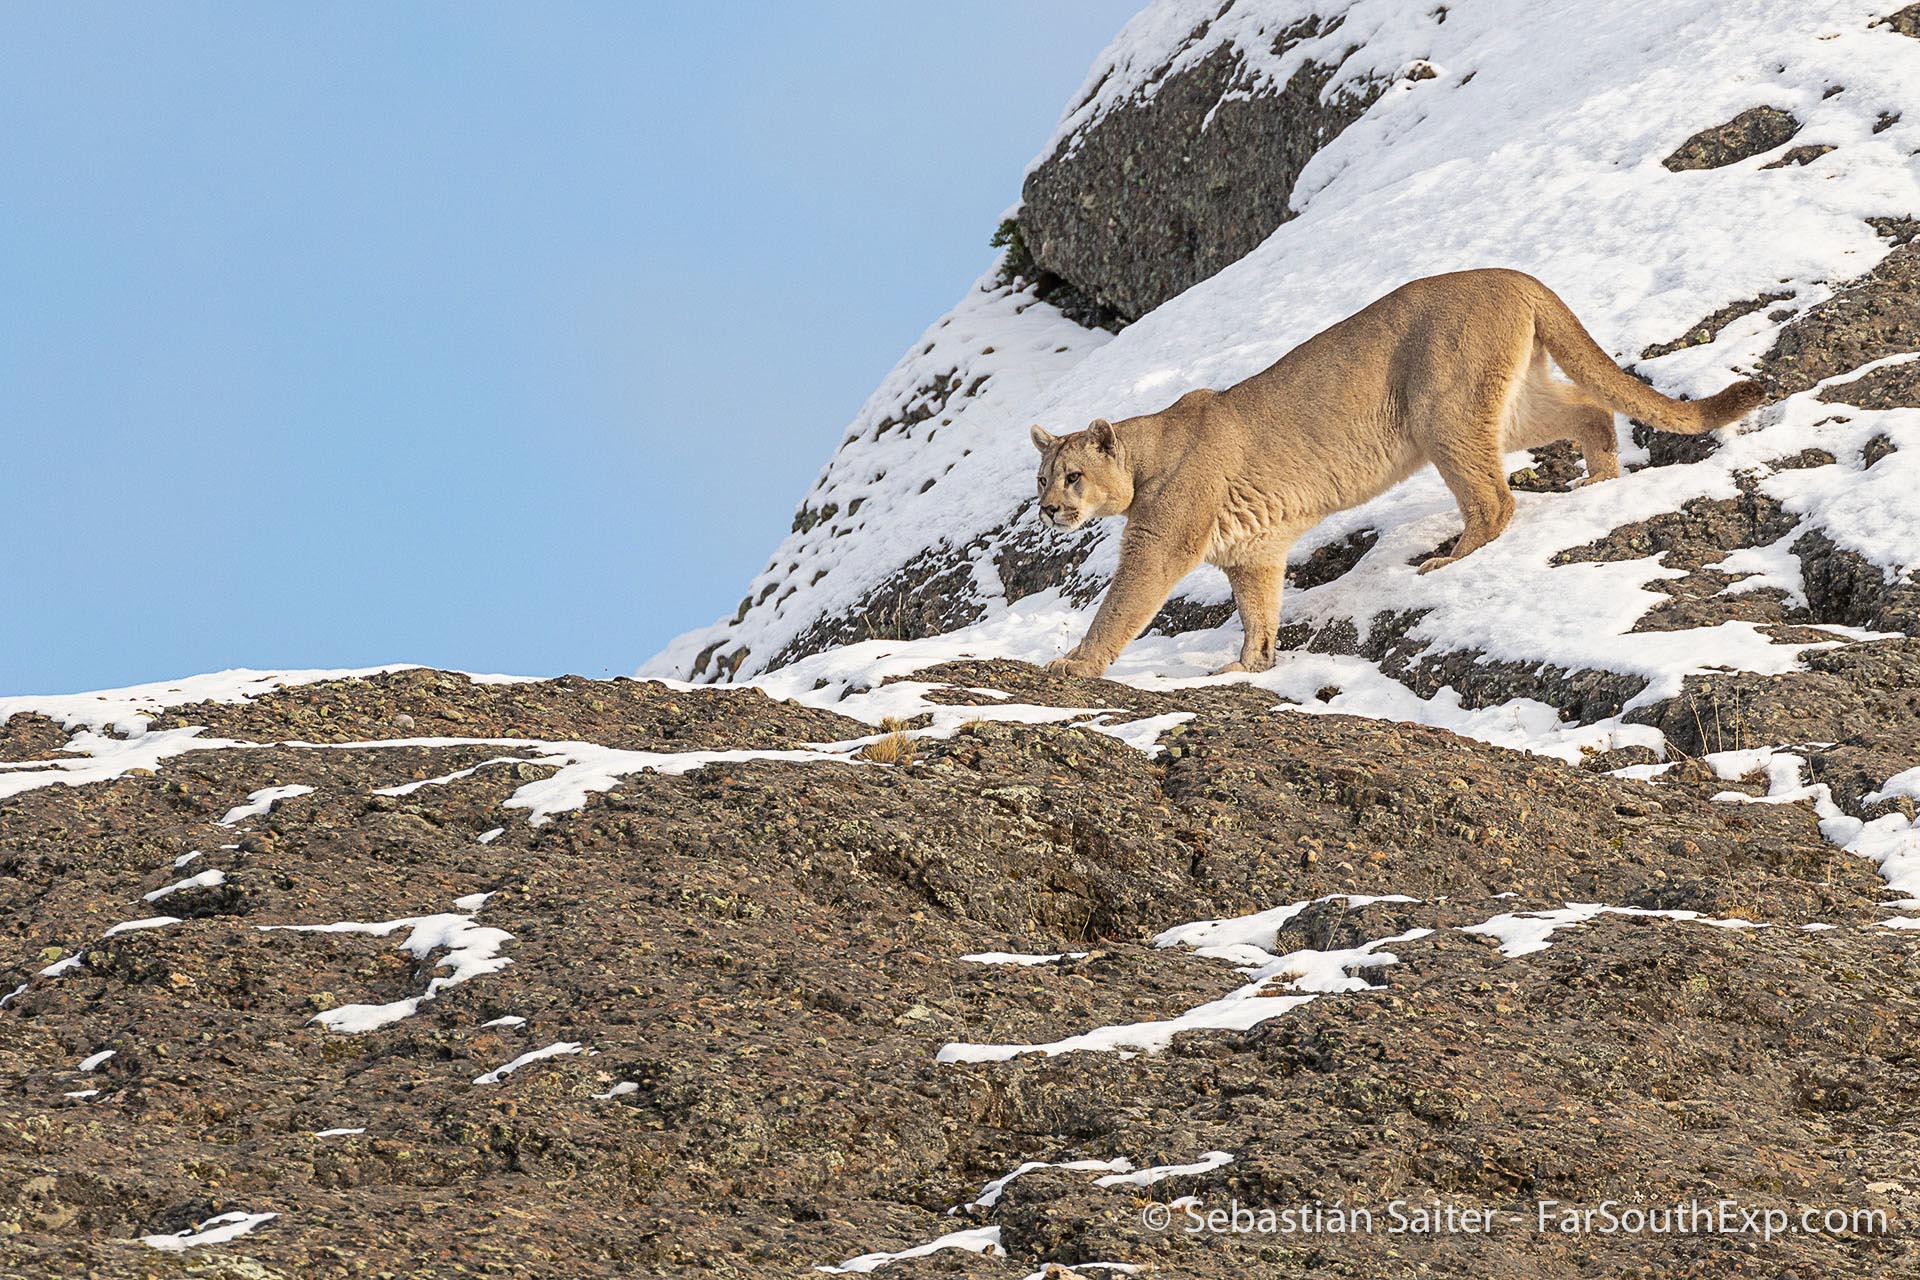 Patagonian Pumas in snow